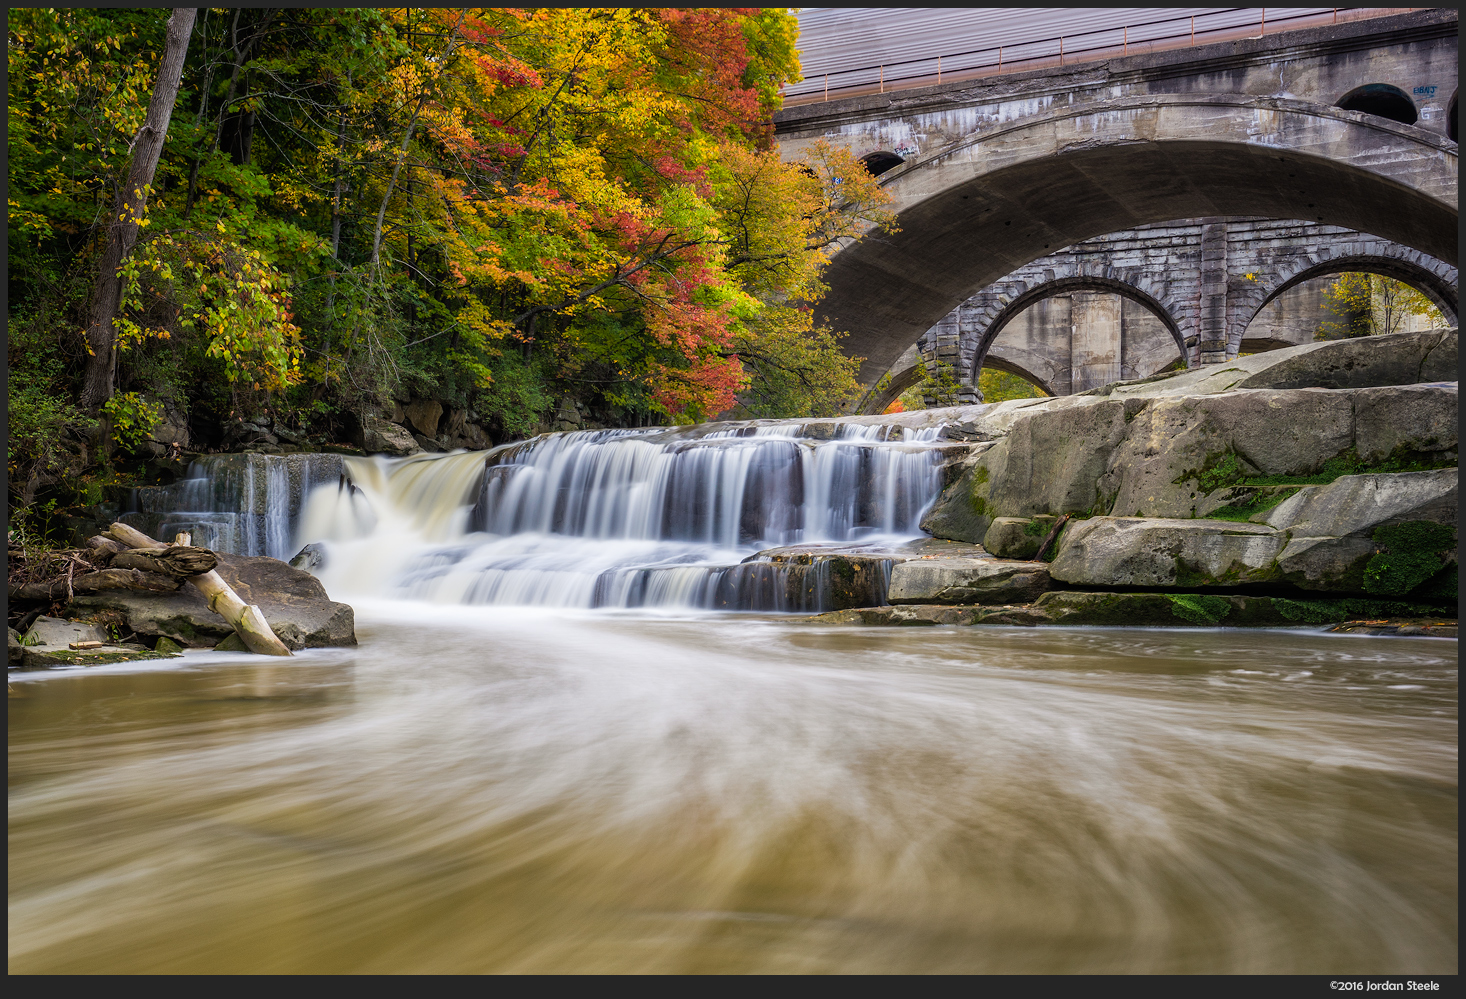 Berea Falls in Autumn - Sony A7 II with Zeiss FE 16-35mm f/4 ZA OSS @ f/16